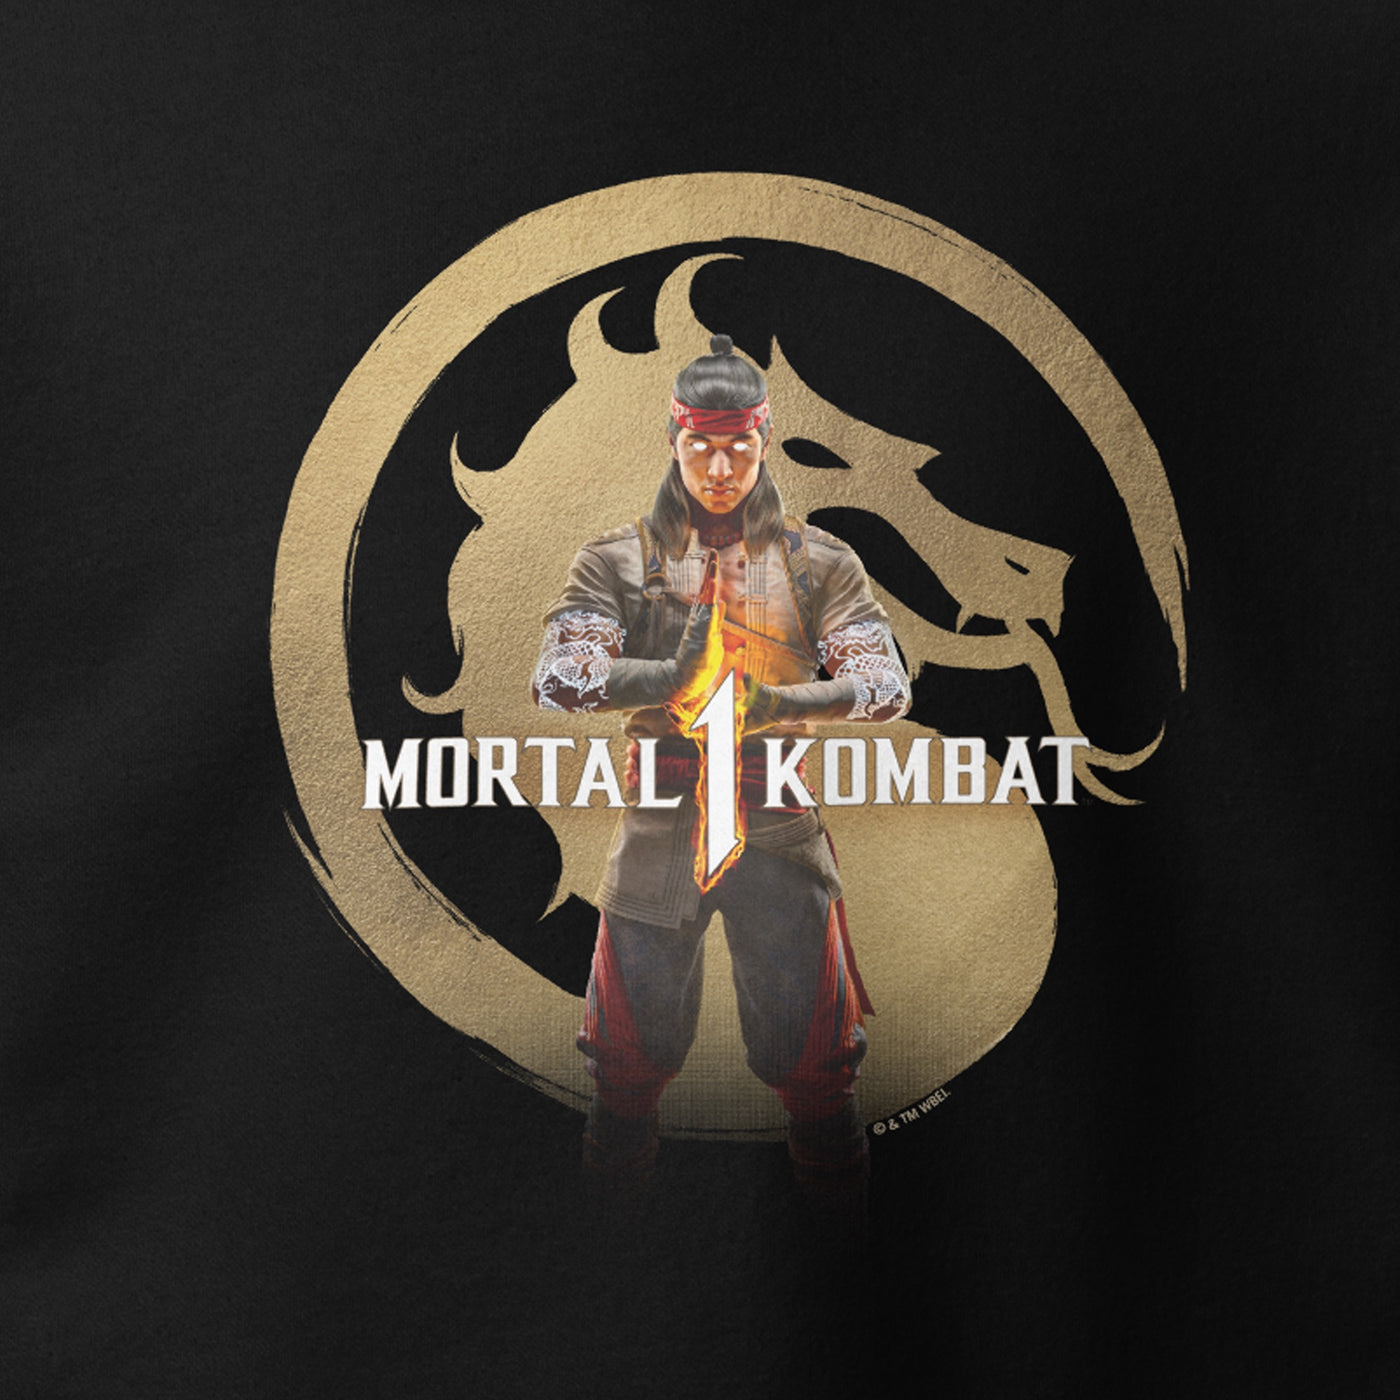 Exclusive Mortal Kombat 1 Gold Logo Adult Hoodie